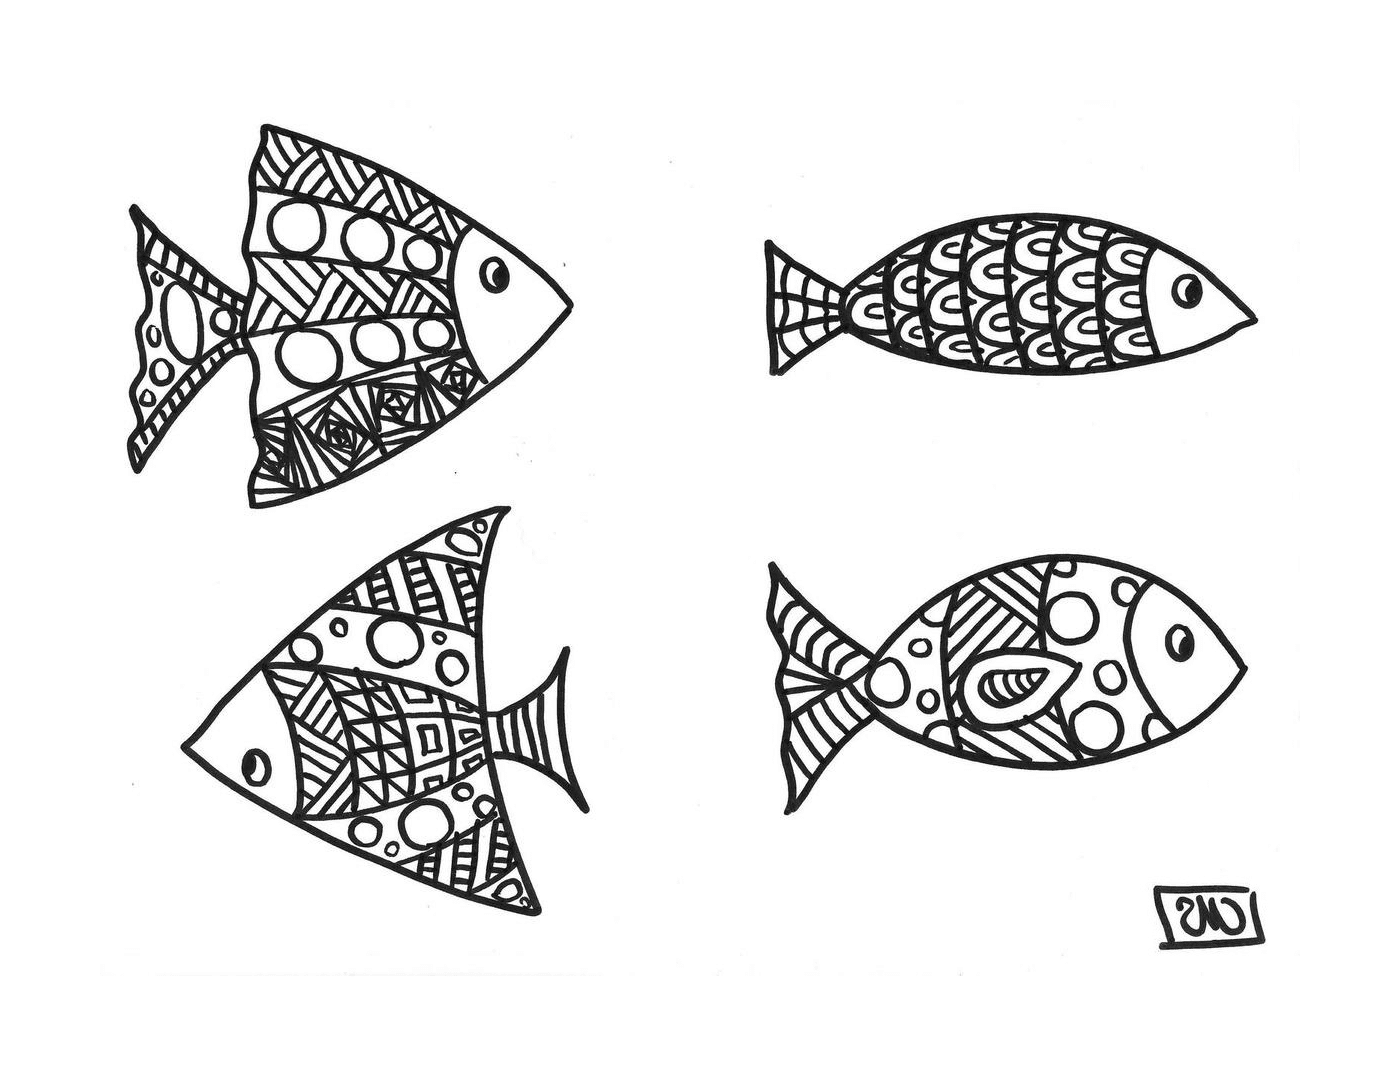  Four fish with unique patterns 